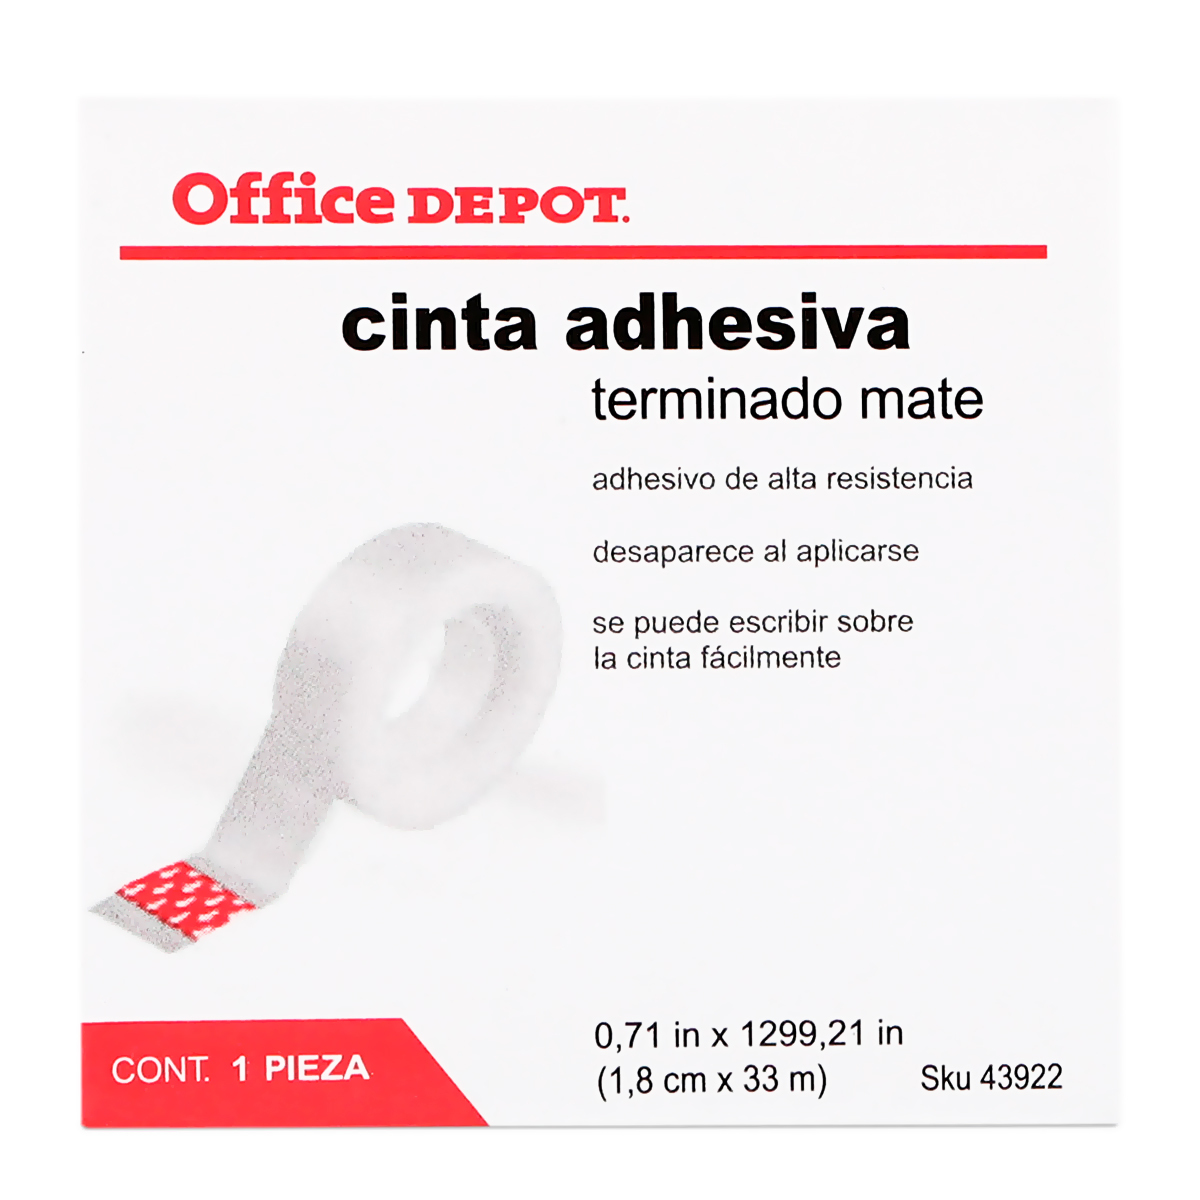 Cinta Adhesiva Invisible Office Depot 33 m x  cm 6 piezas | Office Depot  Mexico